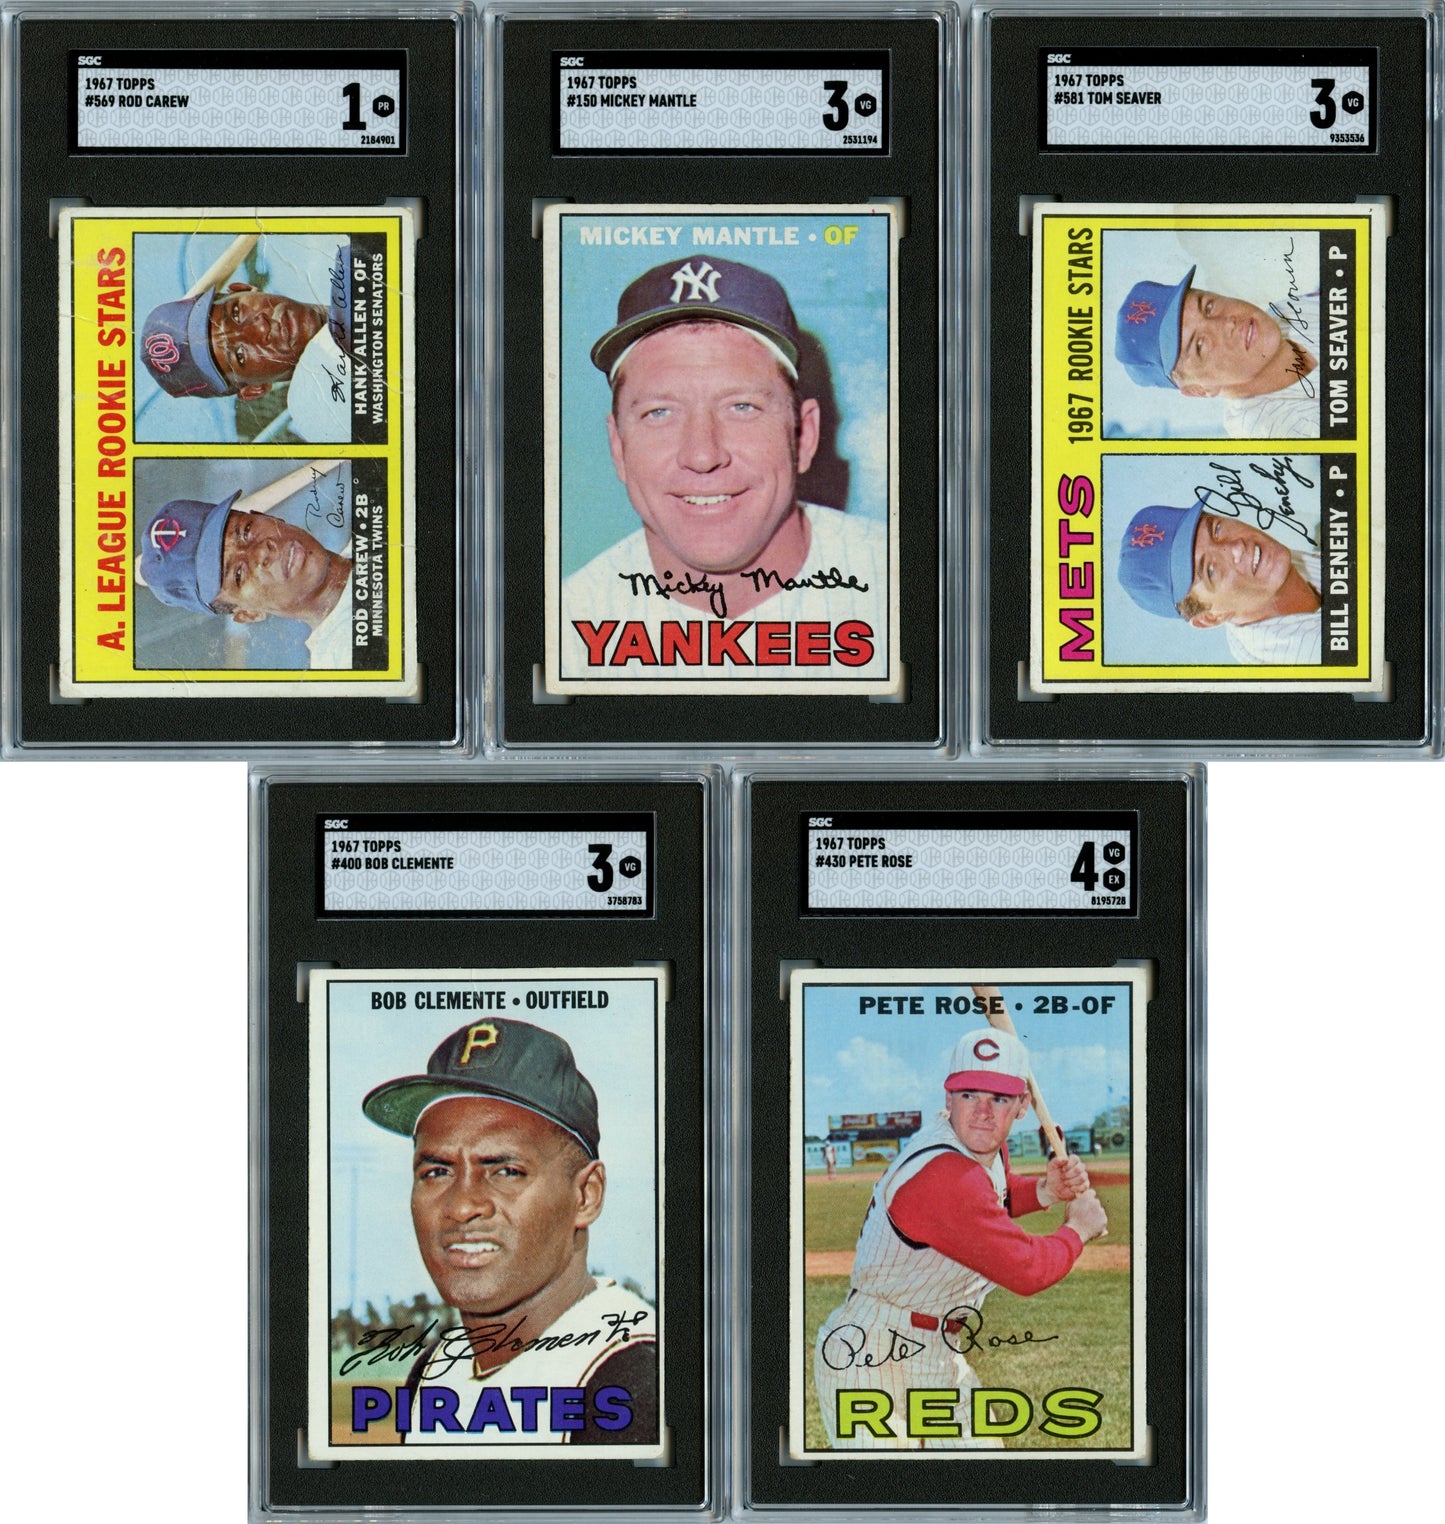 1967 Topps Baseball Set Break 609 Spot Random Card (Tom Seaver Rookie SGC 3, Mickey Mantle SGC 3, Pete Rose SGC 4, etc!)